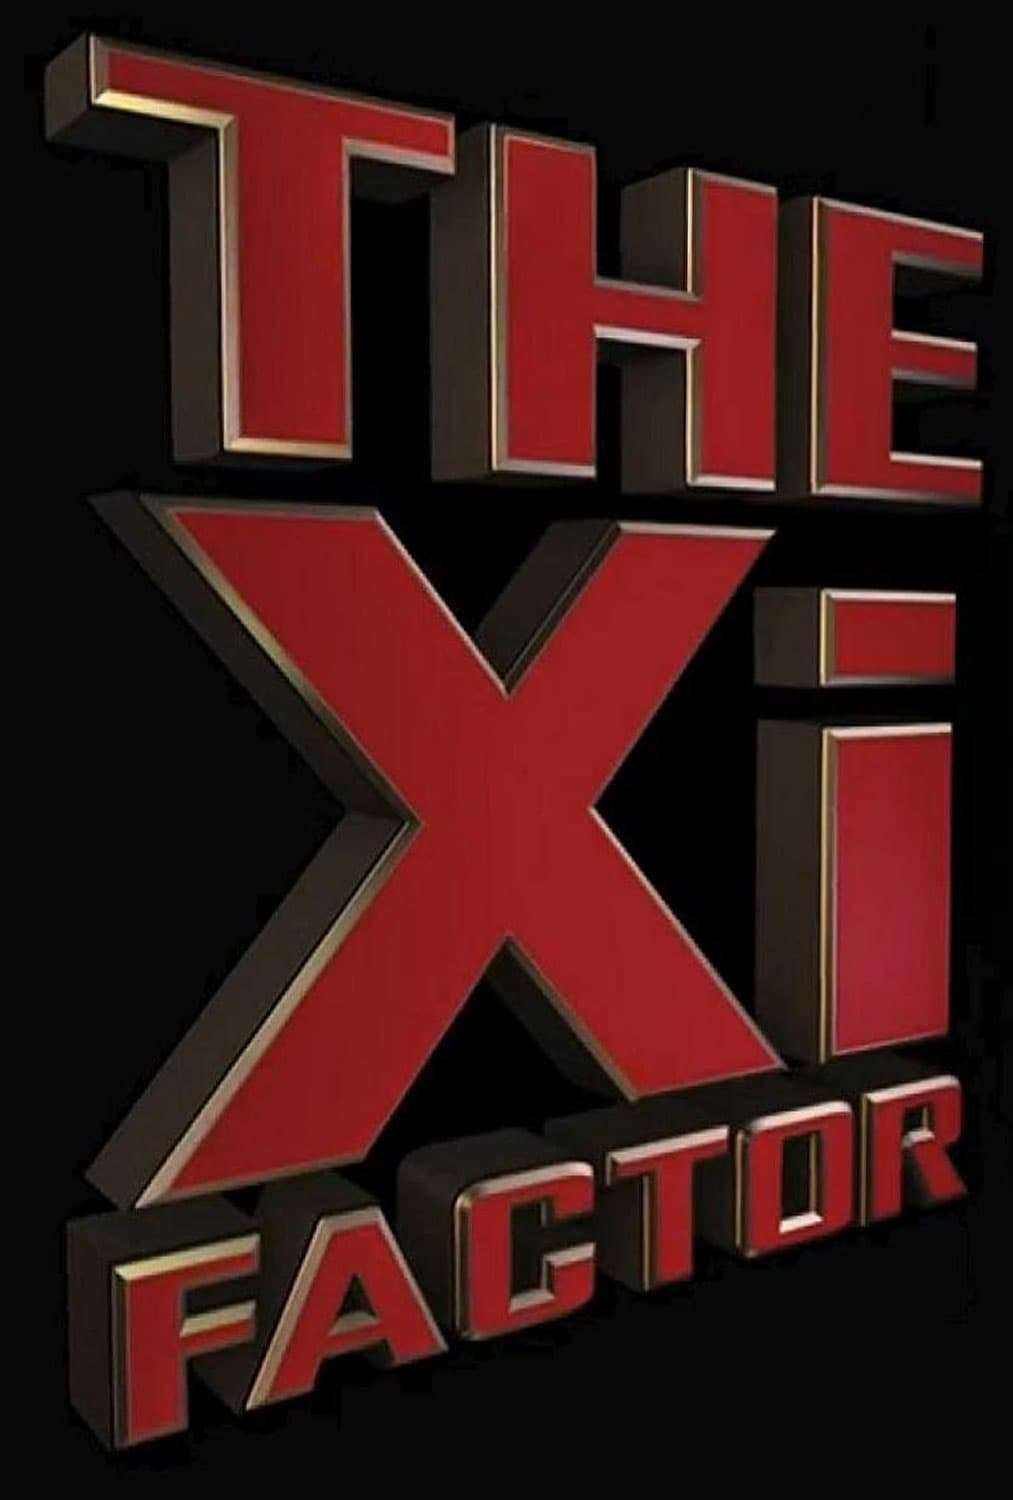 The Xi Factor